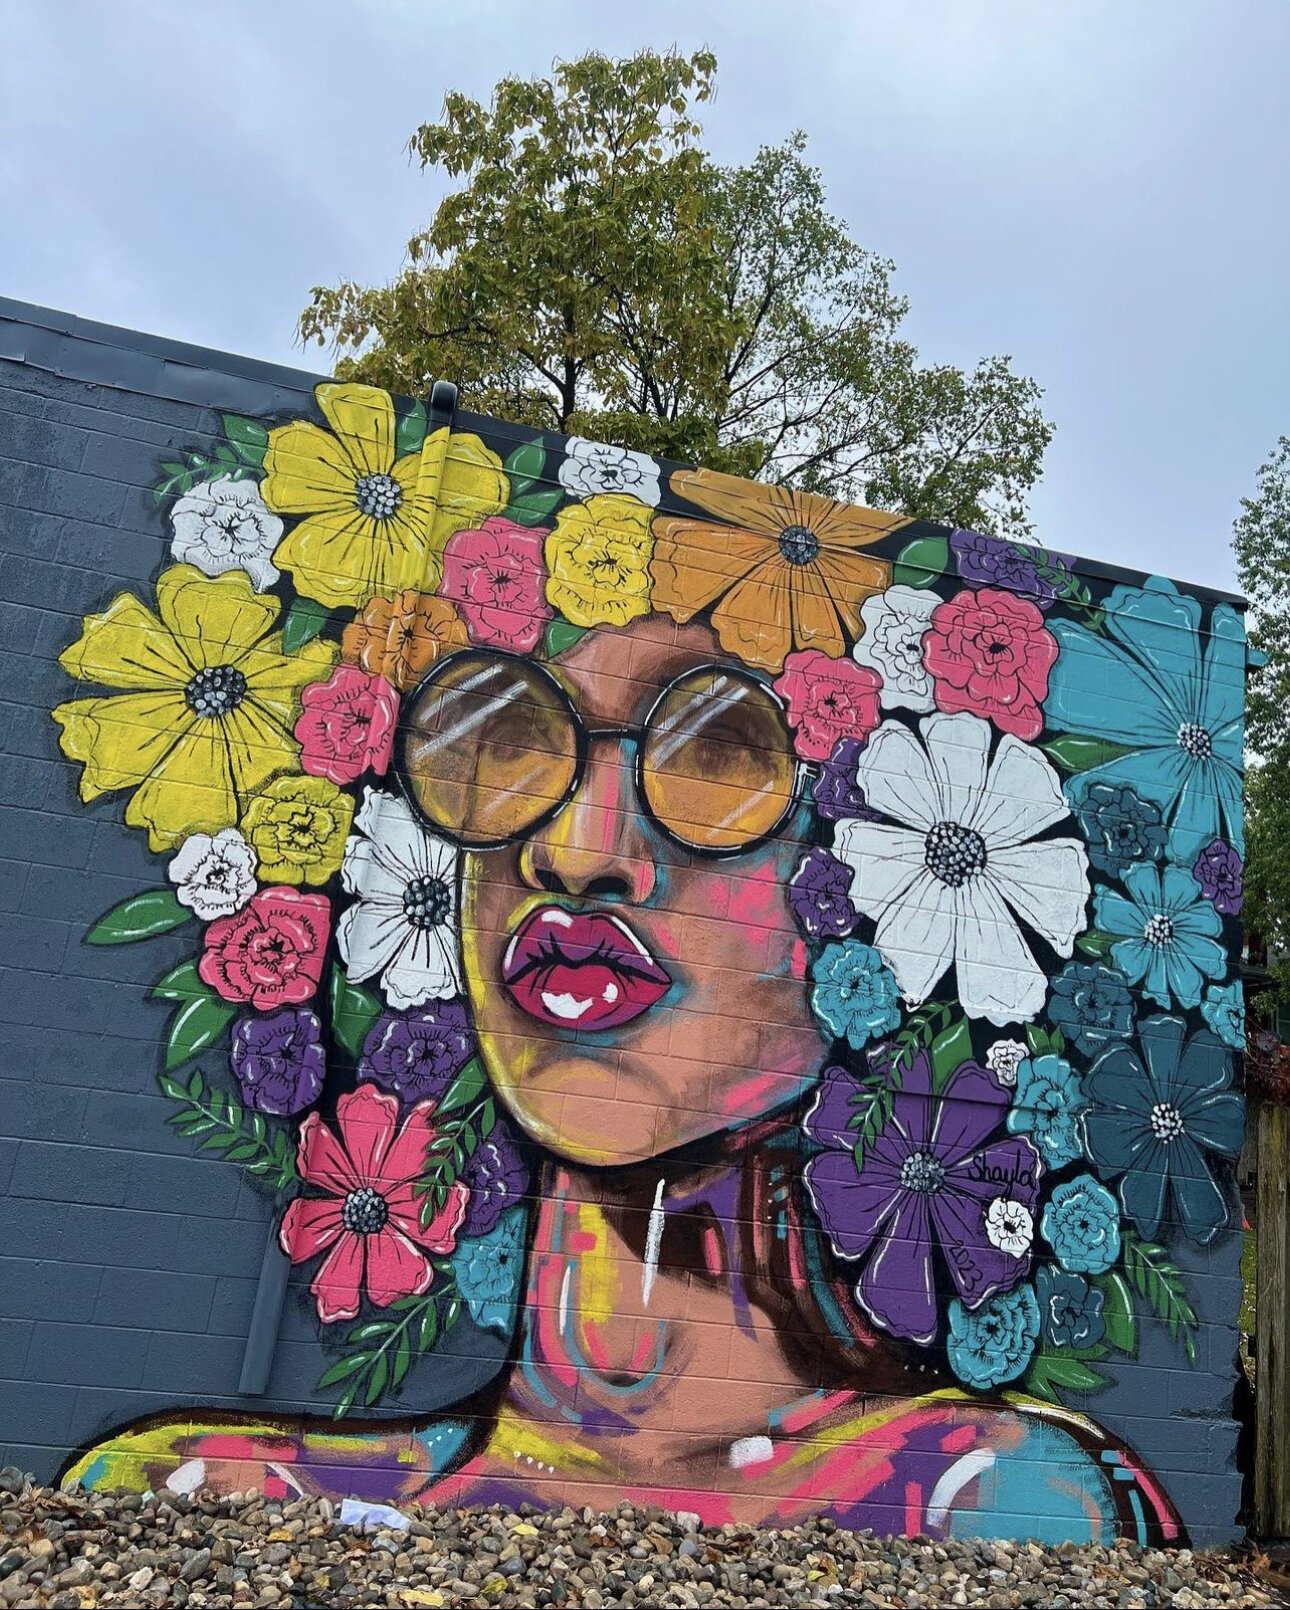 The mural "Urban Beauty" by Fort Wayne artist Shayla.